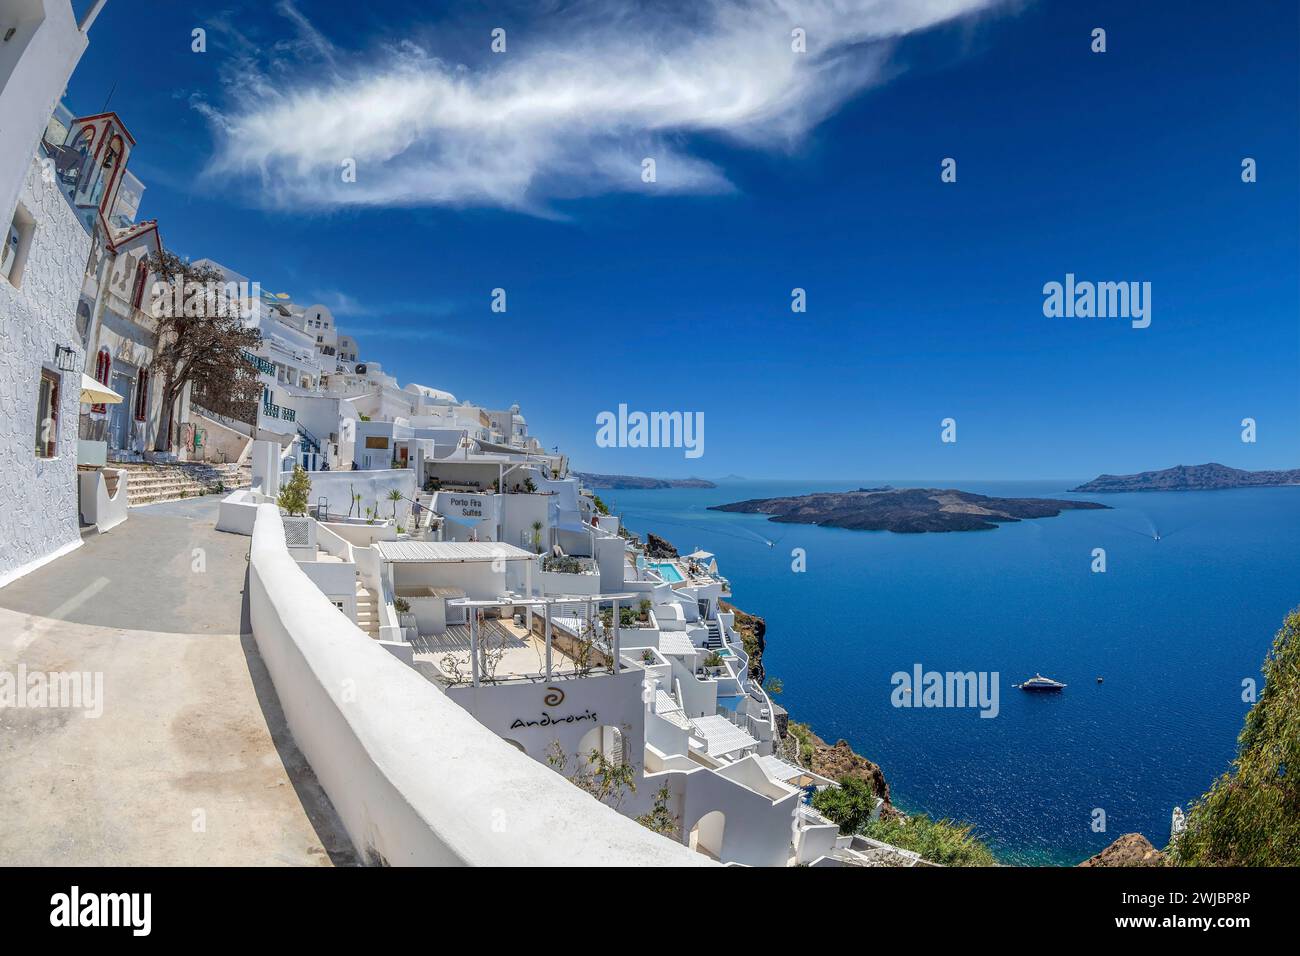 FIRA, SANTORINI ISLAND, GREECE - JUNE 21, 2021: Typical white architecture of Fira (Thira) city. Volcanic island Nea Kameni in background. Stock Photo